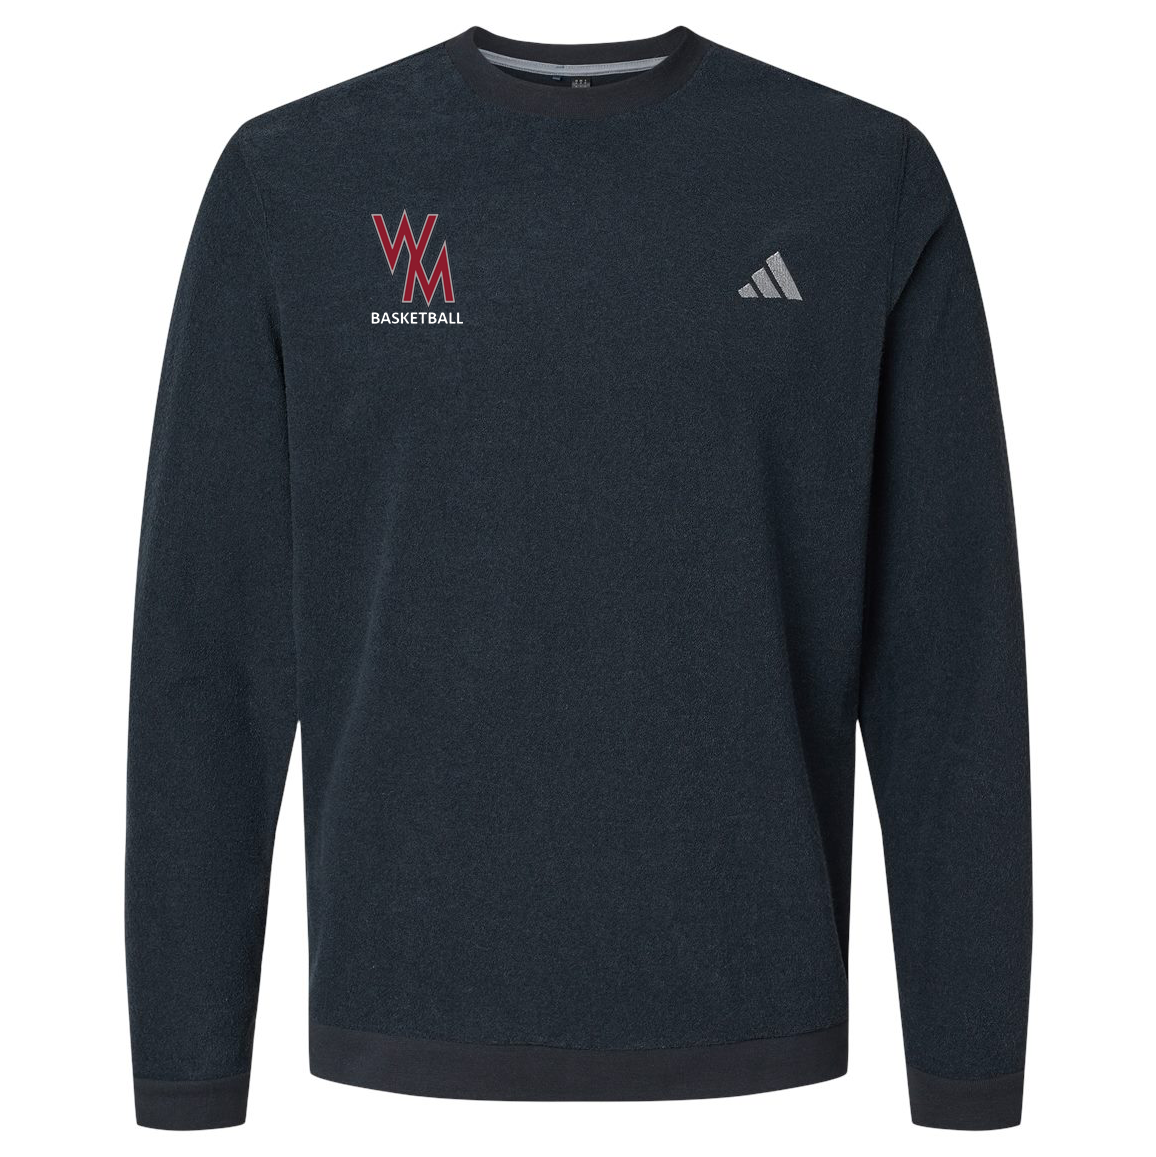 Winters Mill HS Basketball Adidas Crewneck Sweatshirt